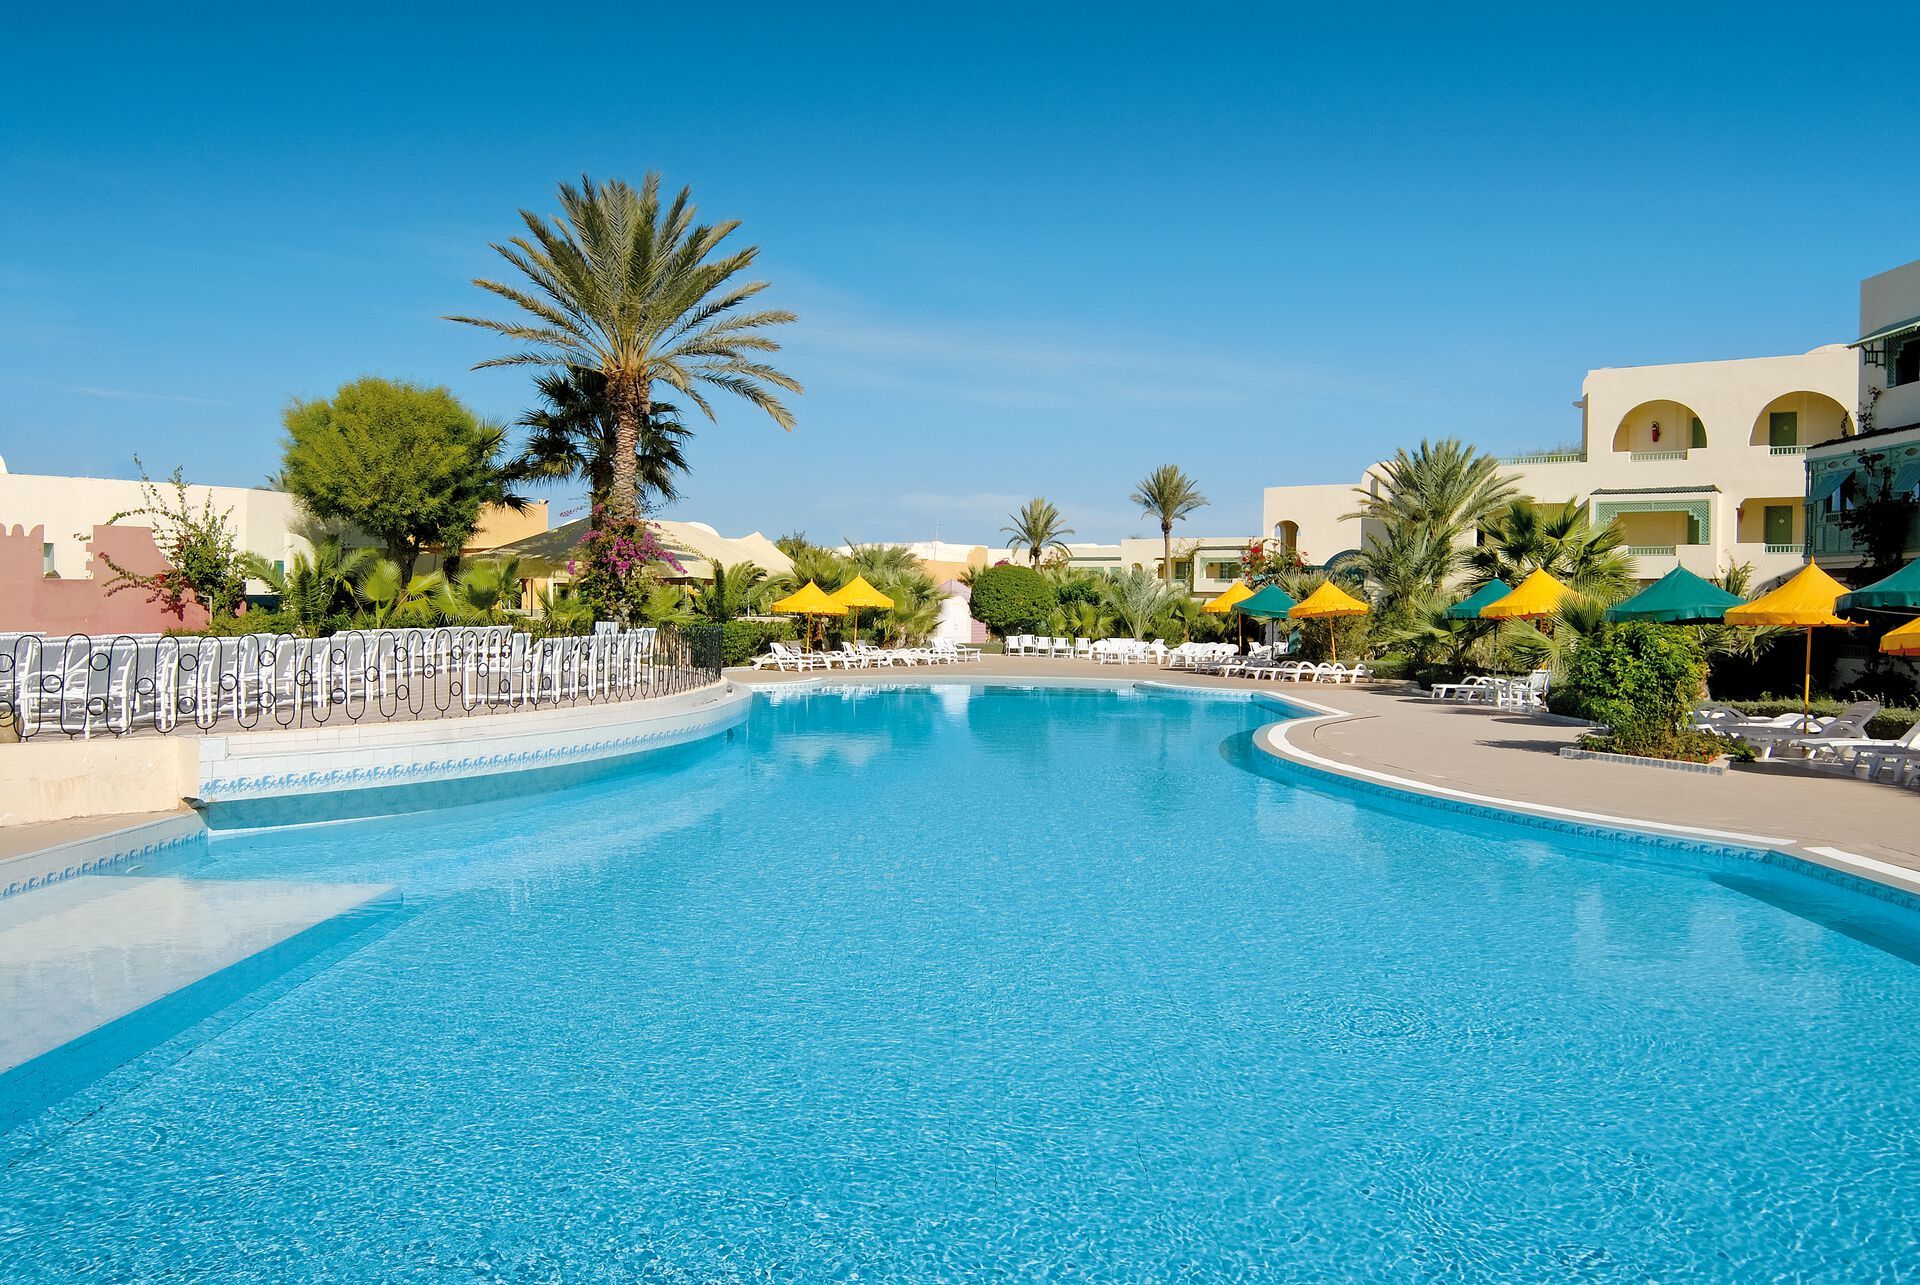 Tunisie - Djerba - Hotel Ksar Djerba 4*